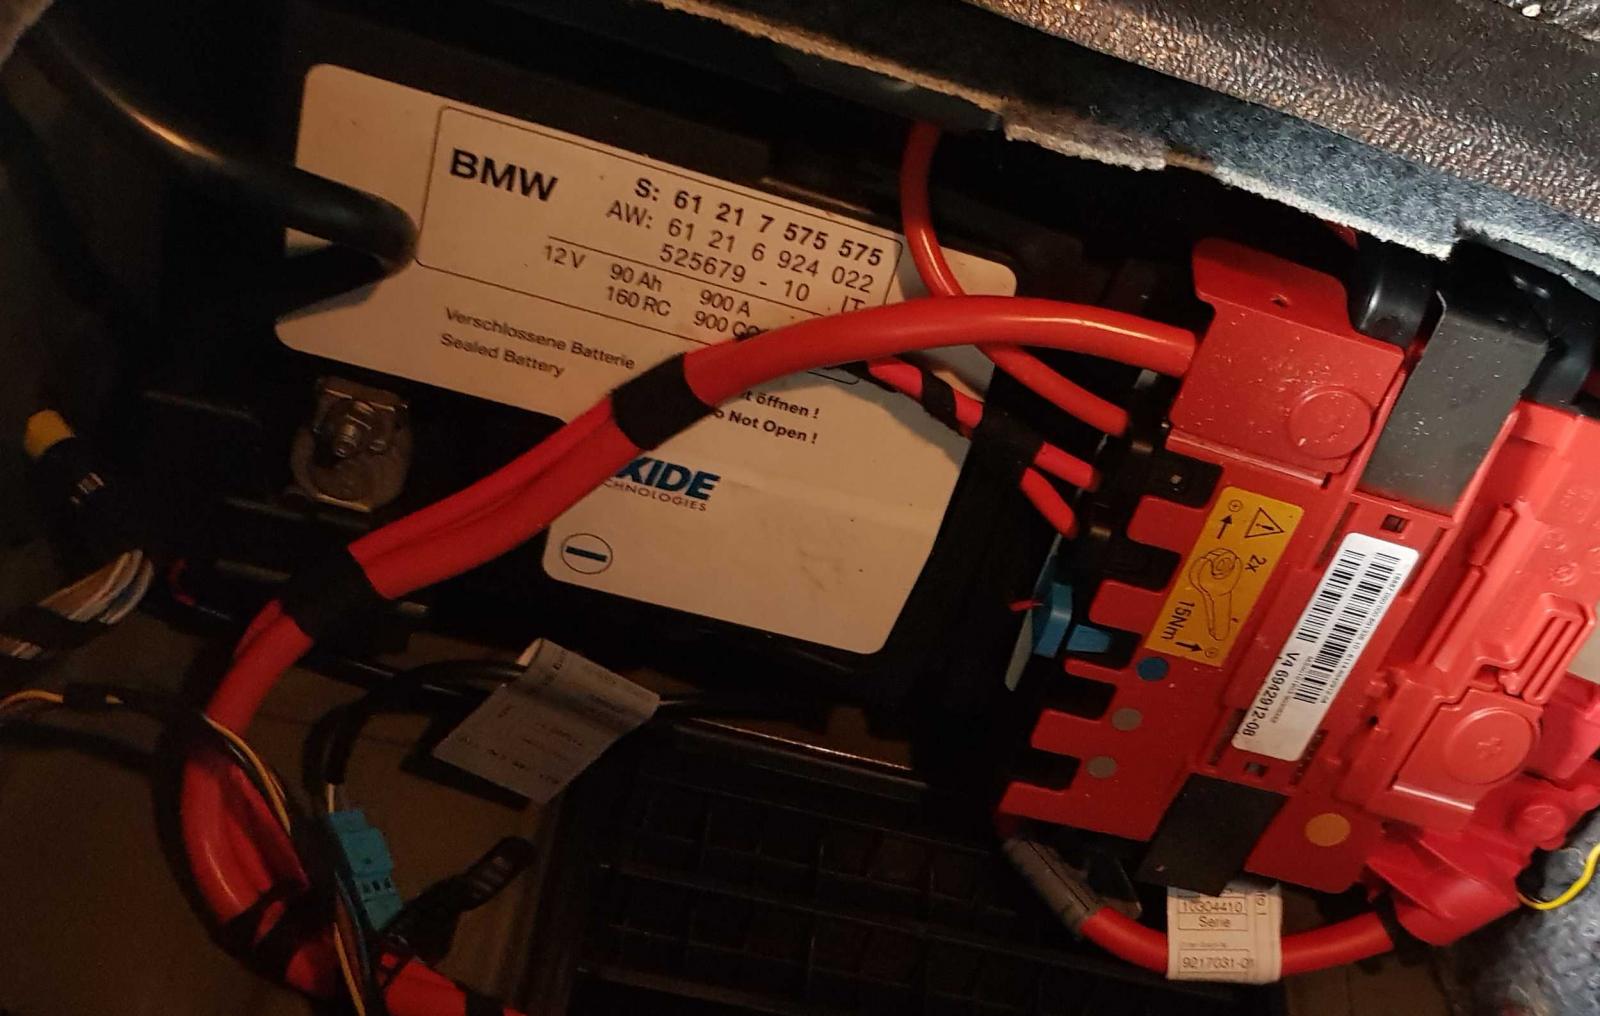 Batterie laden - AGM verbaut? - BMW X3 FORUM